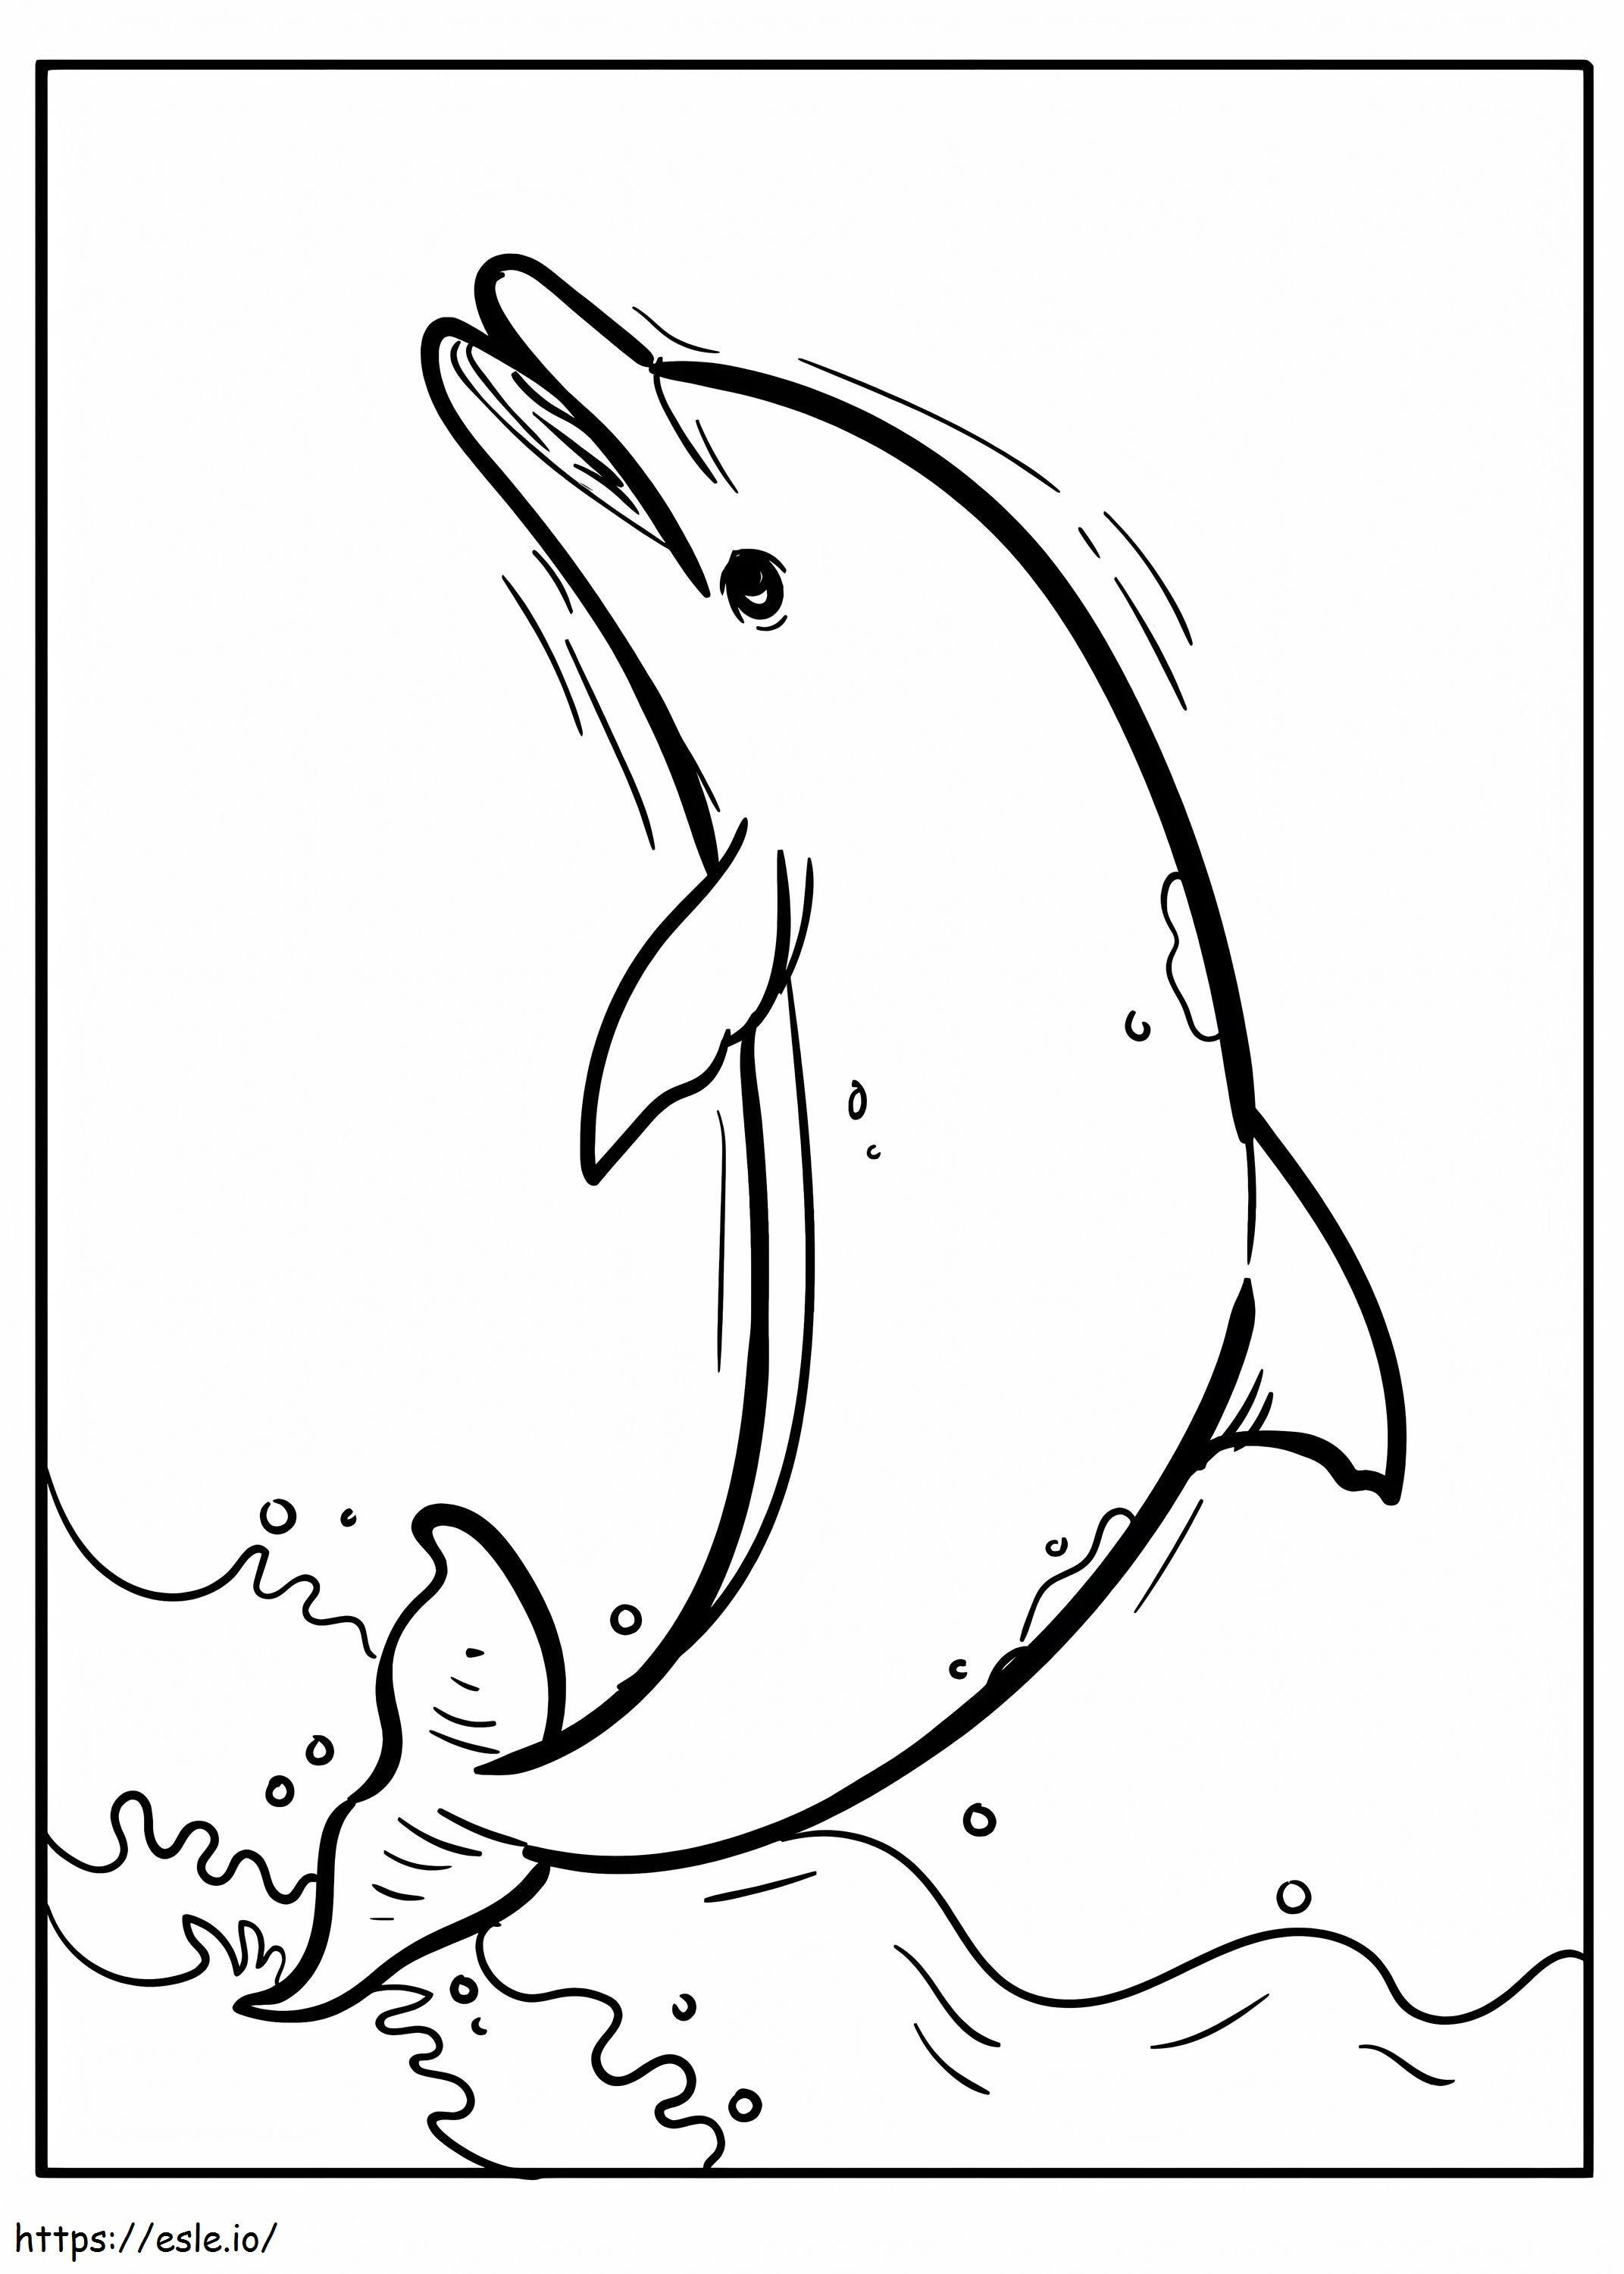 Skaczący rysunek delfina kolorowanka